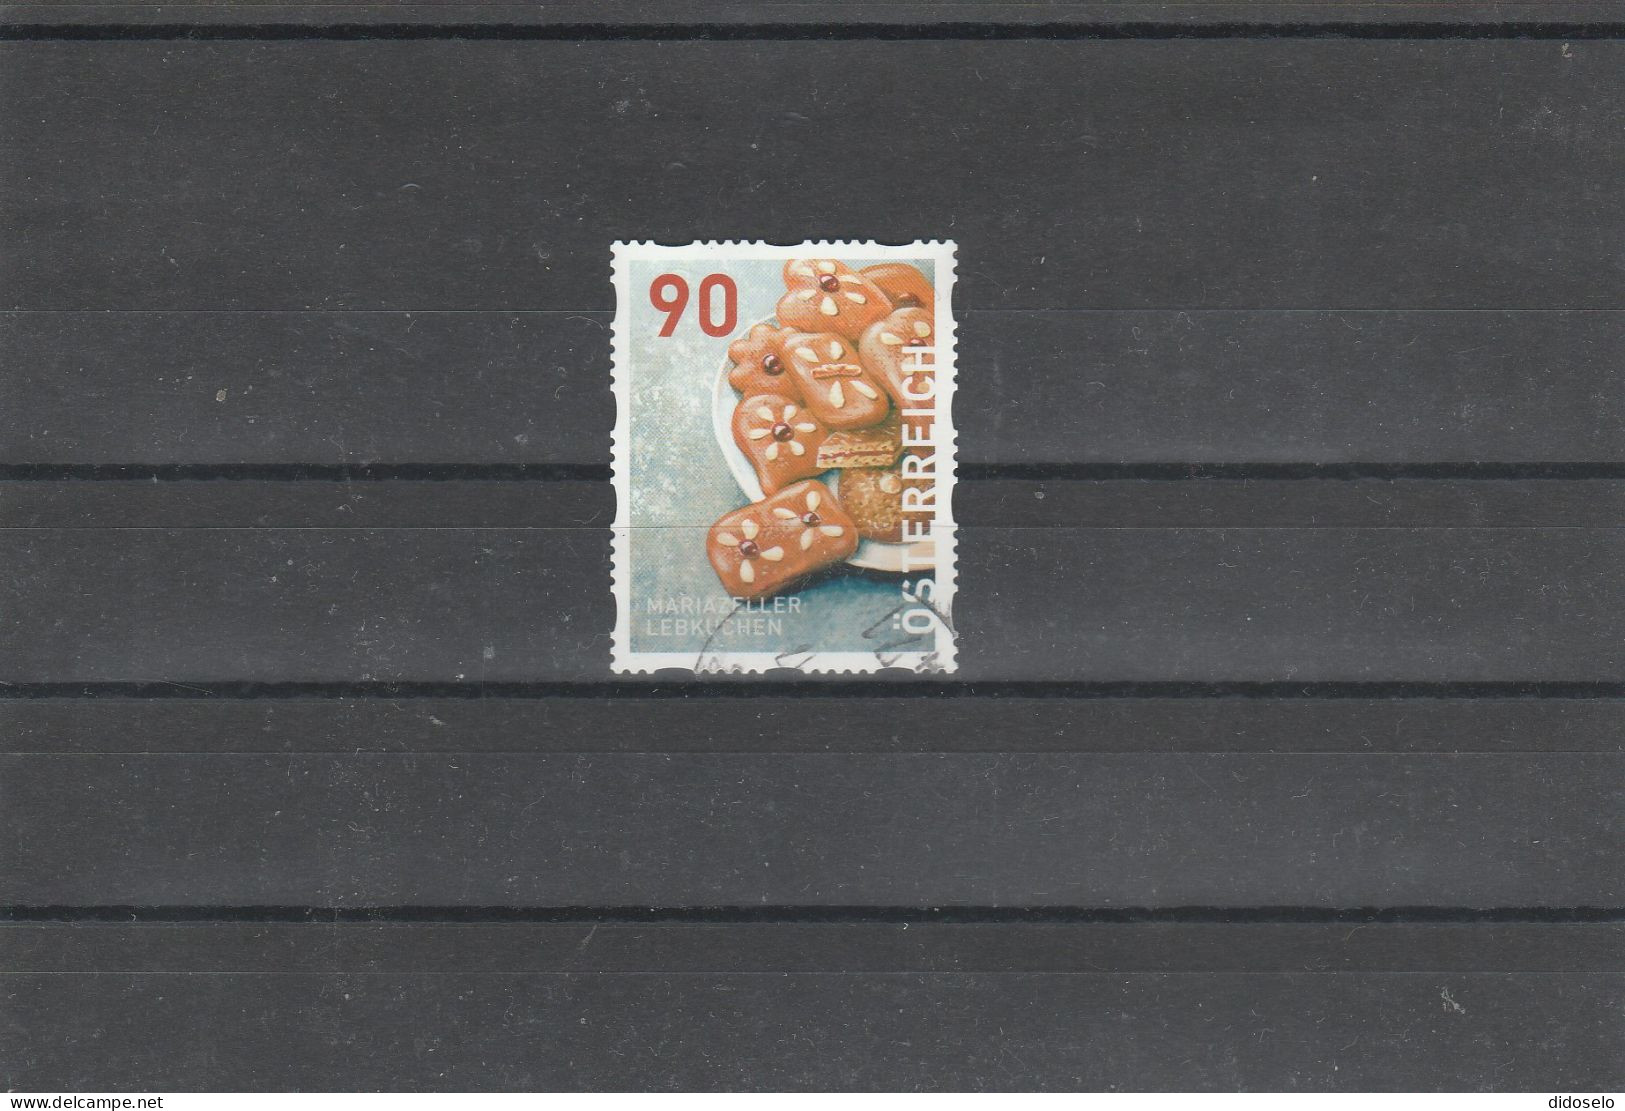 Austria - 2019 - Dispenser Stamp - Used - Mic.#14 - Gebruikt